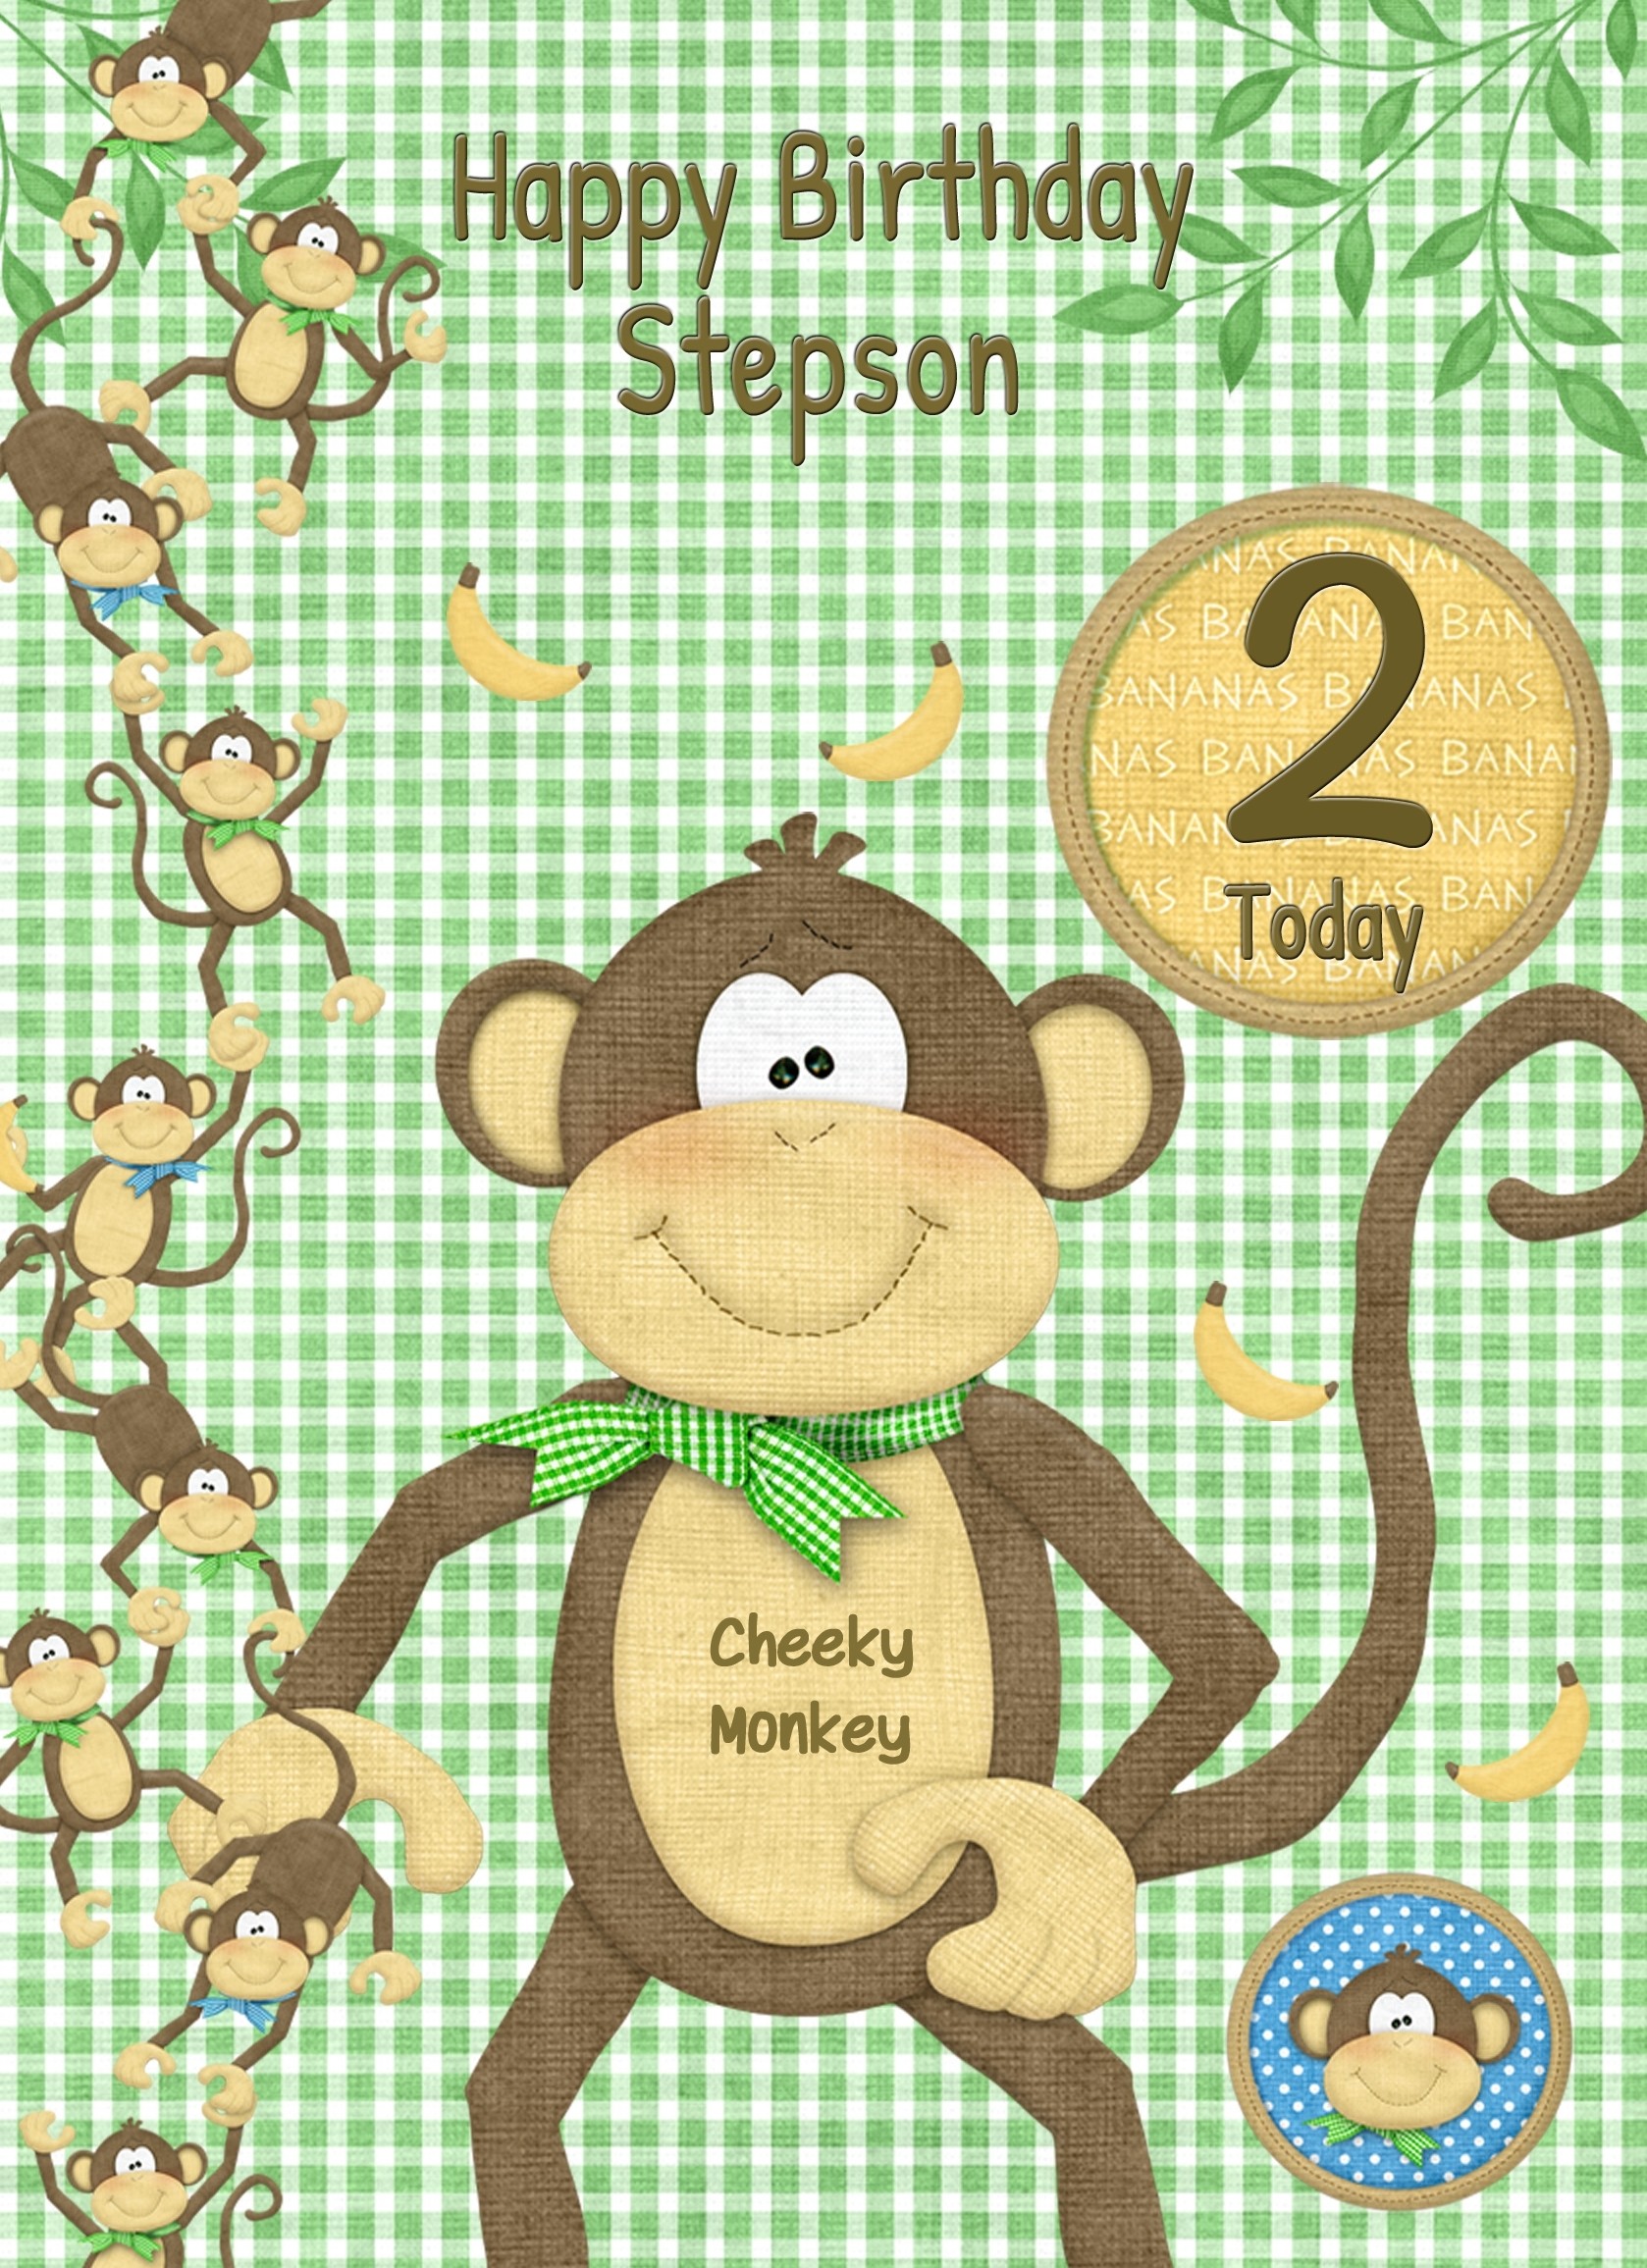 Kids 2nd Birthday Cheeky Monkey Cartoon Card for Stepson